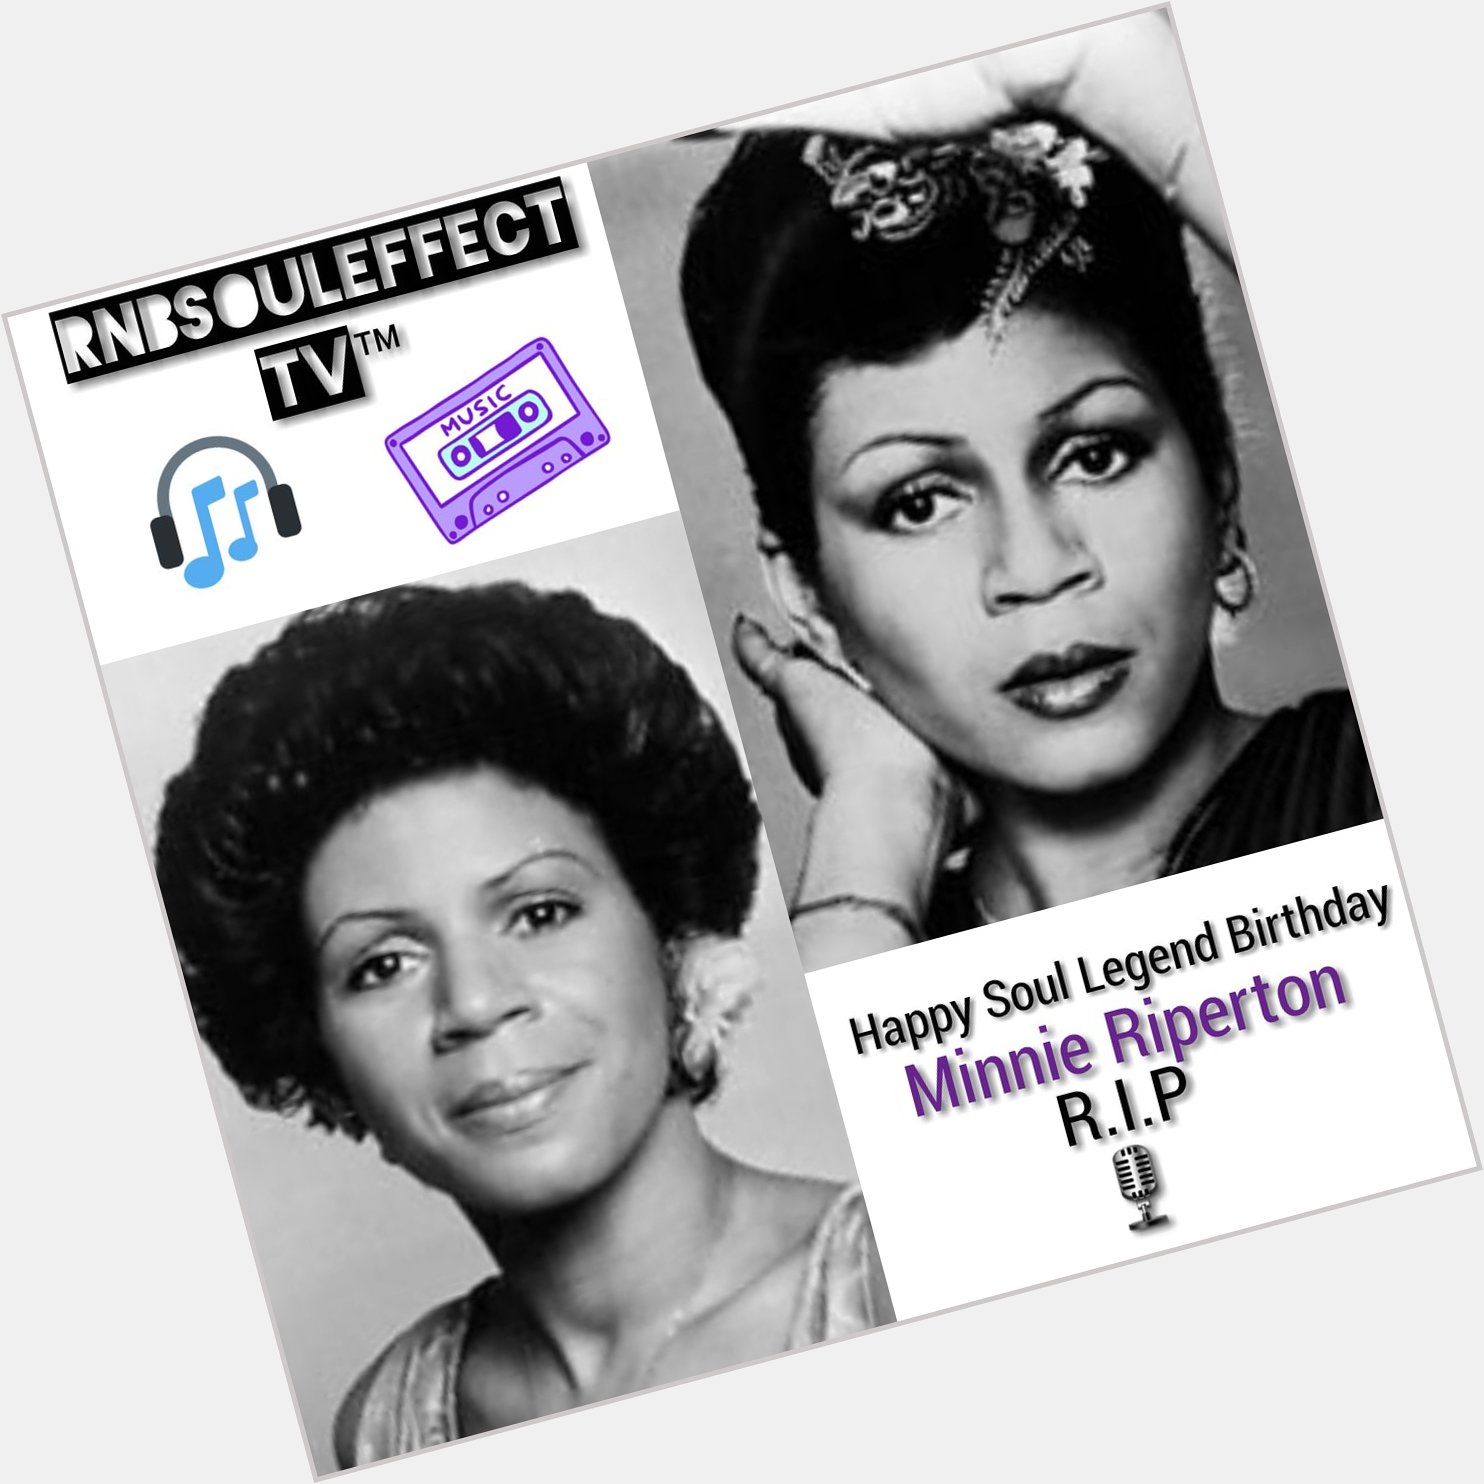 Happy Soul Legend Birthday Minnie Riperton     